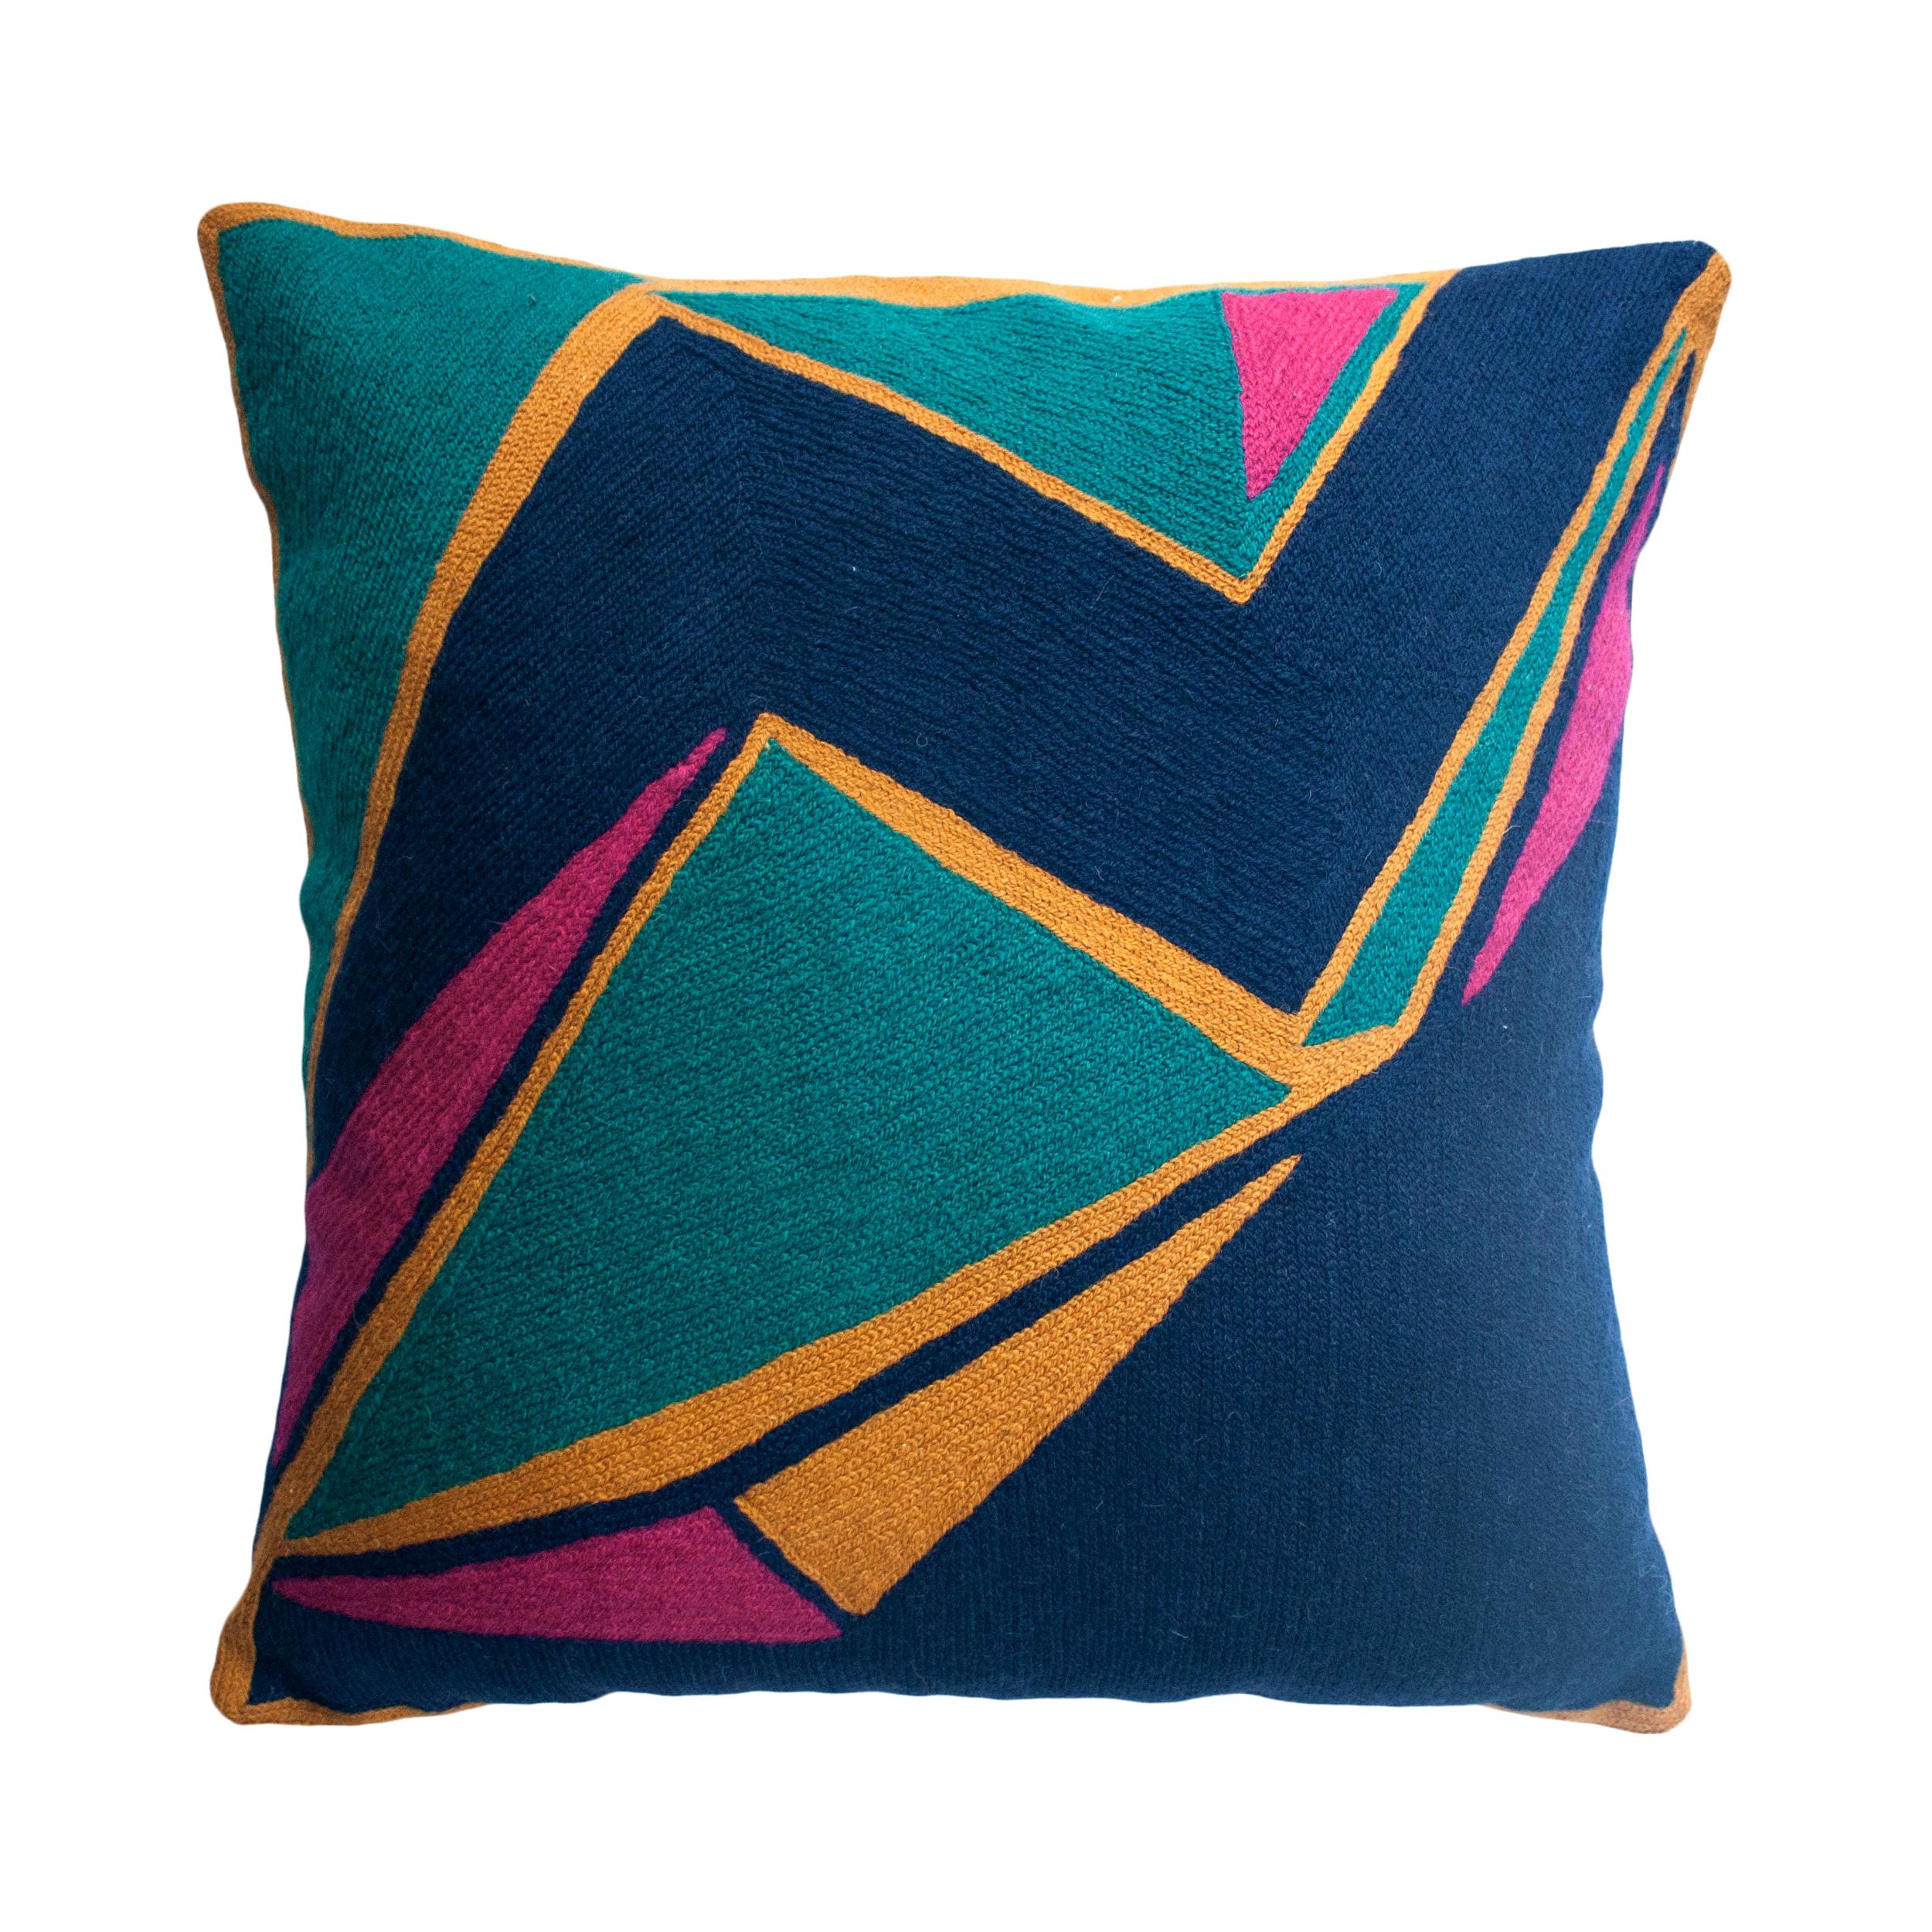 Modern Geometric Detroit Indigo Hand Embroidered Throw Pillow Cover